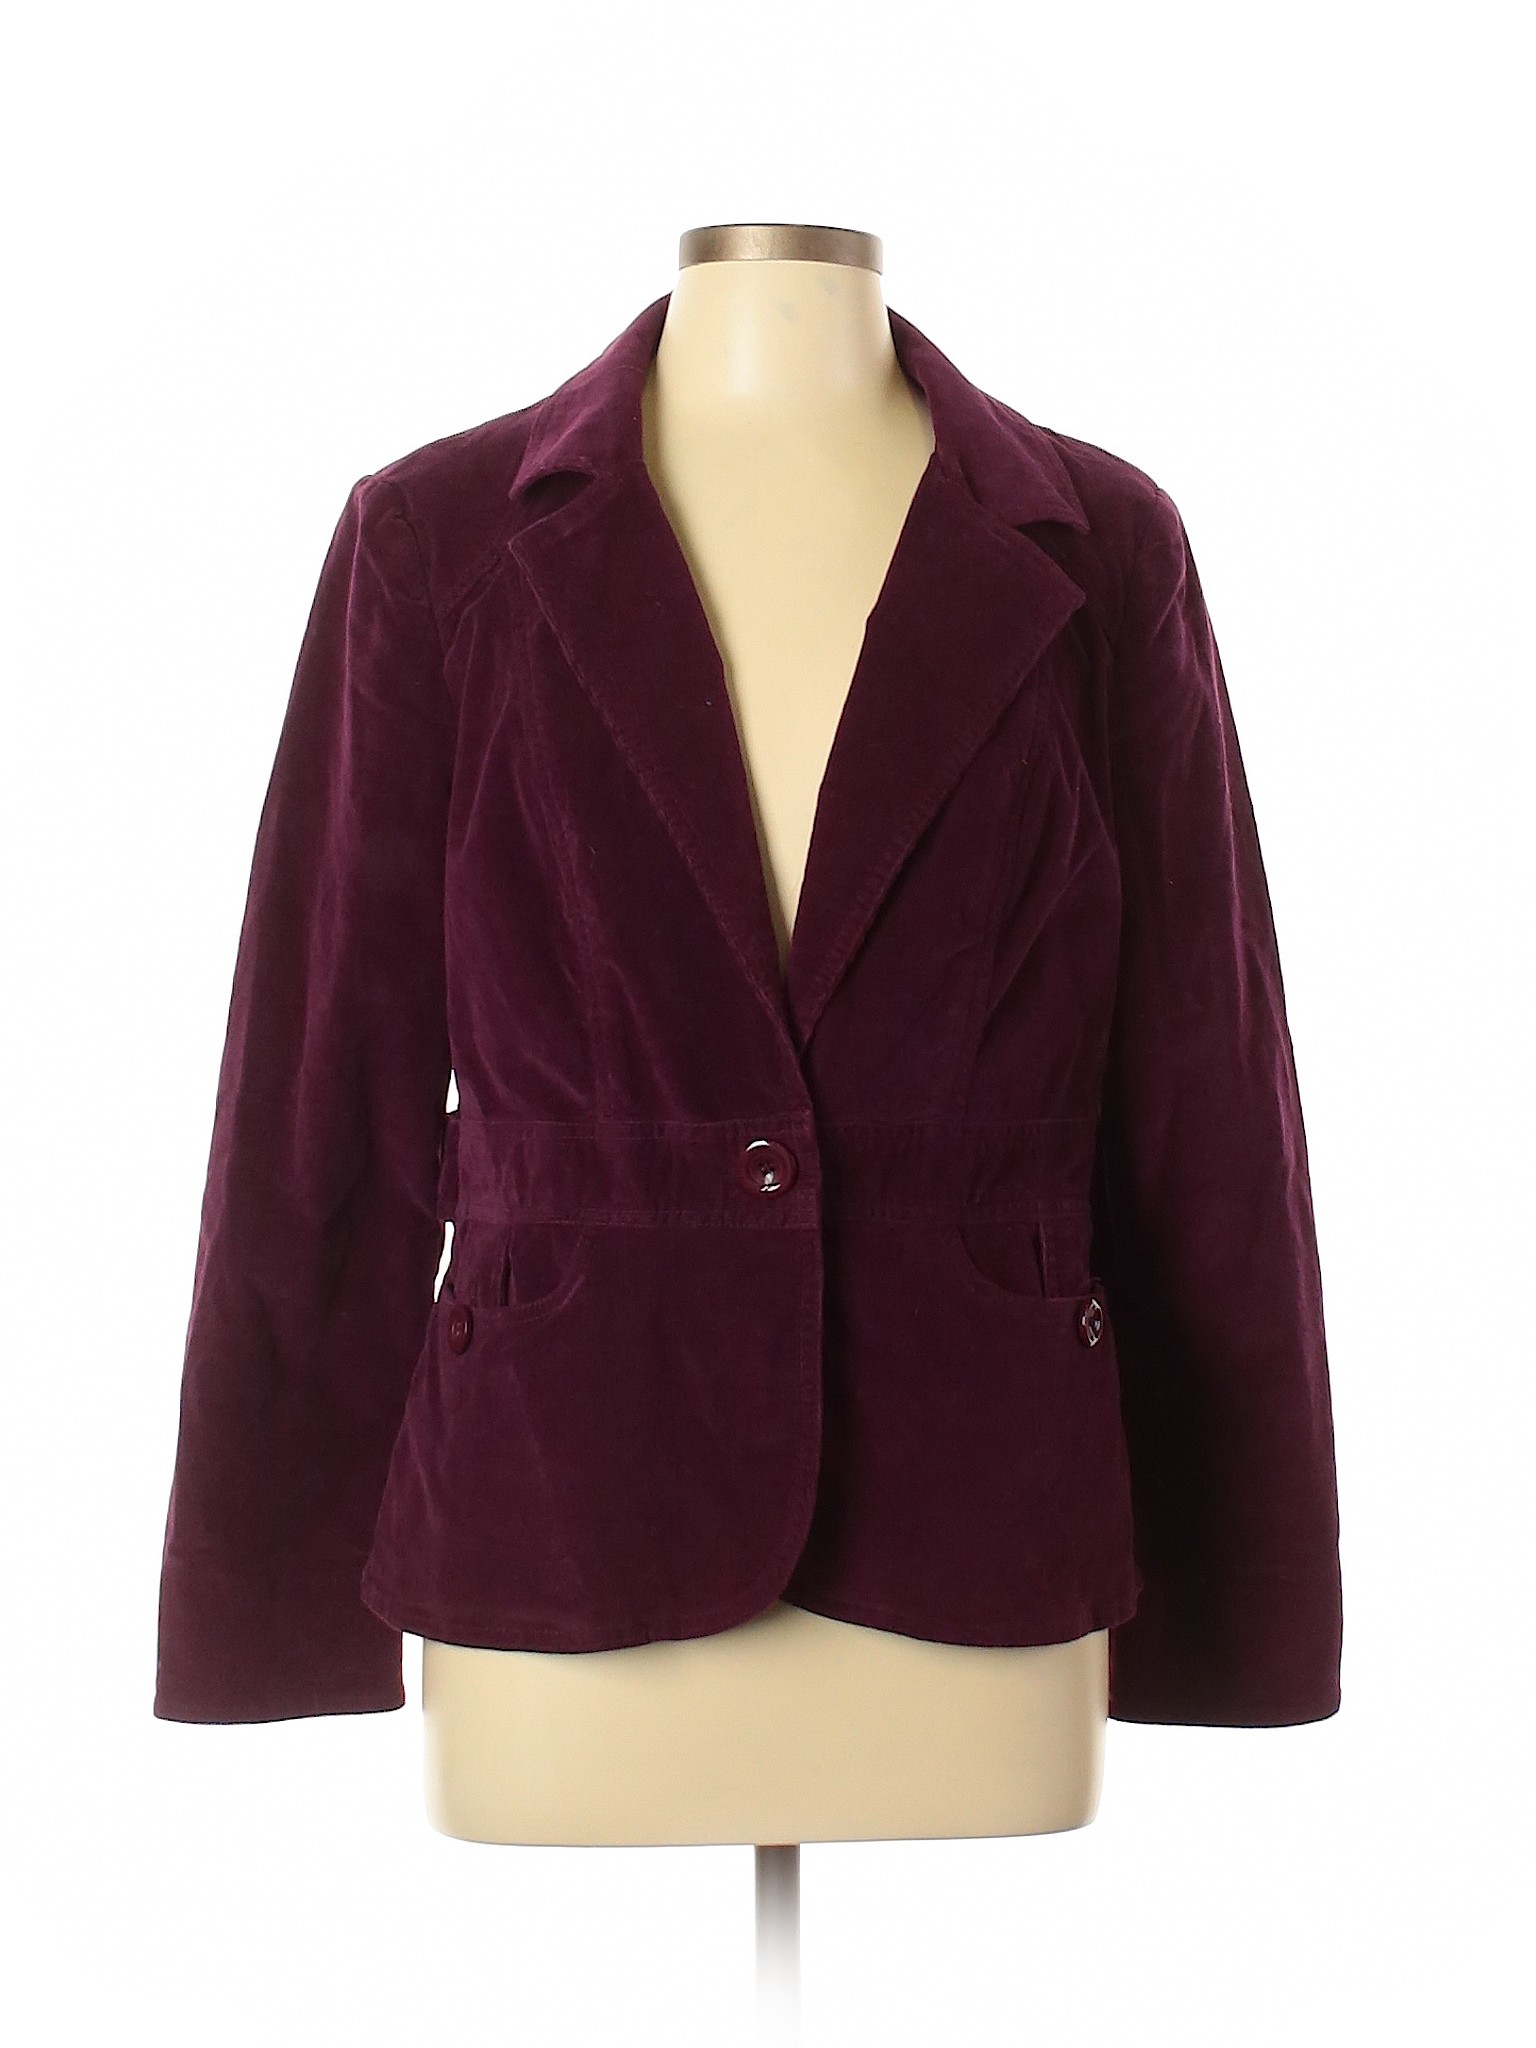 SONOMA life + style Women Purple Jacket L | eBay